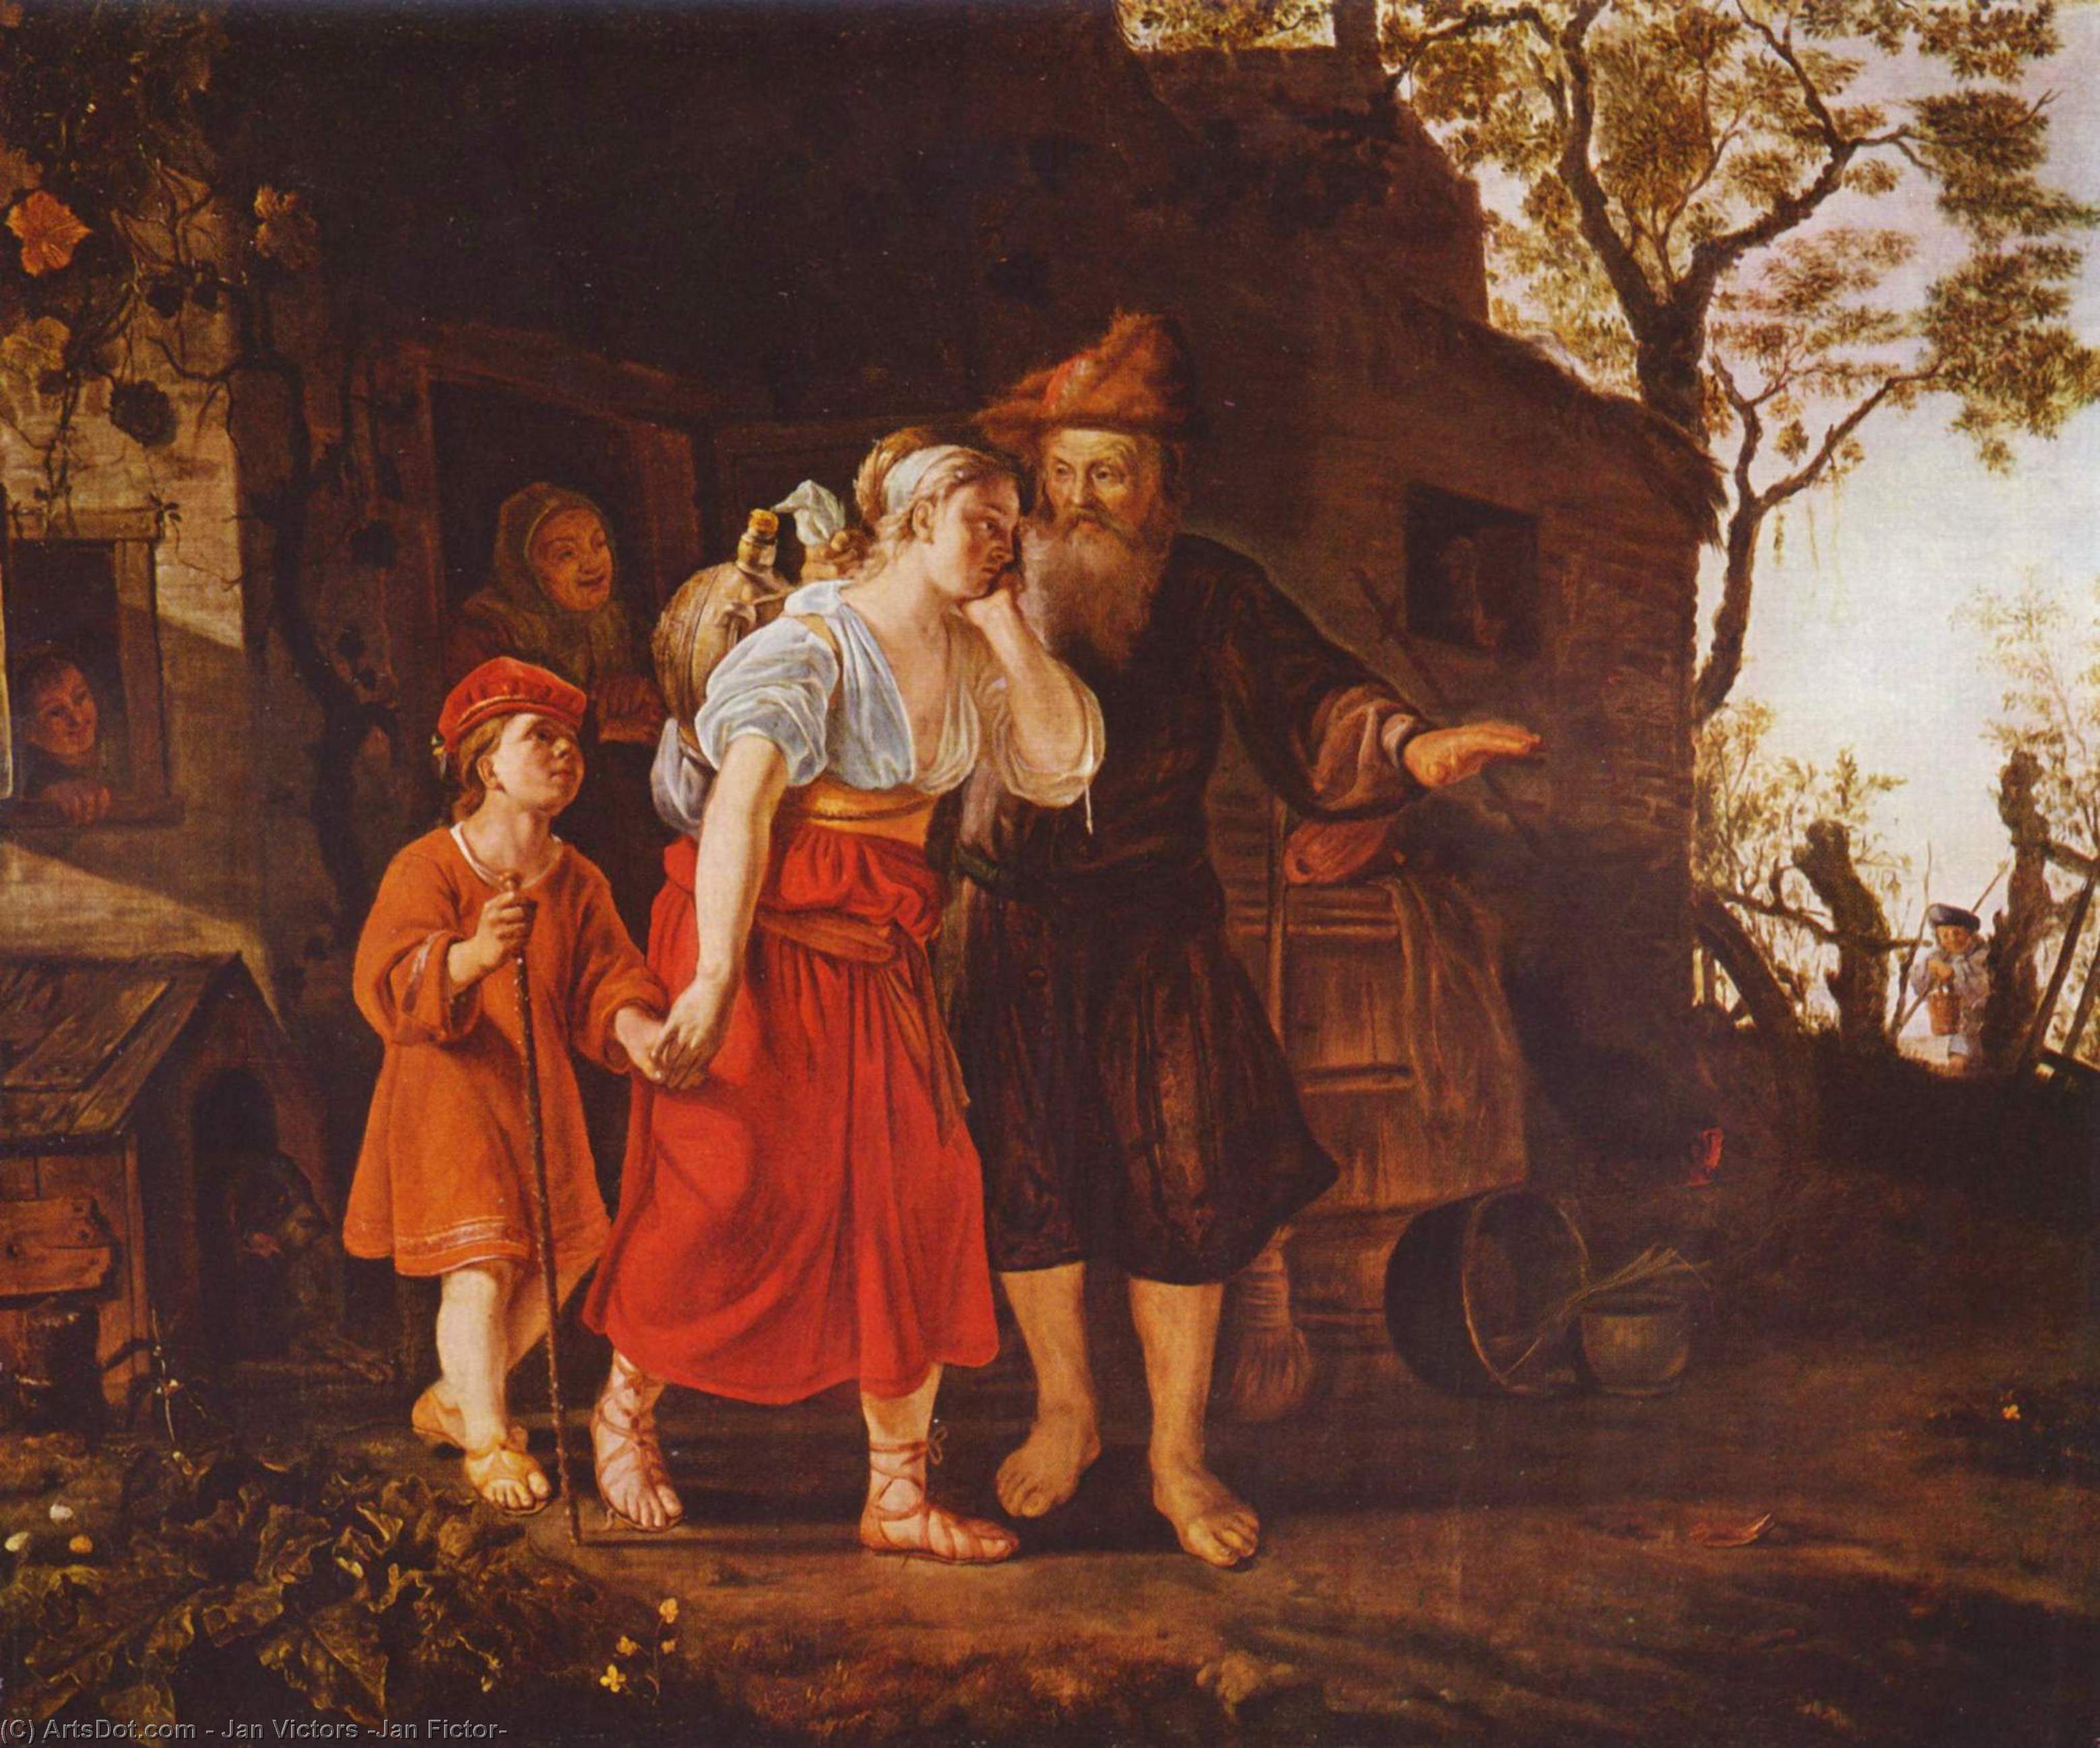 Buy Museum Art Reproductions The Expulsion of Hagar by Jan Victors (Jan Fictor) (1619-1679, Netherlands) | ArtsDot.com